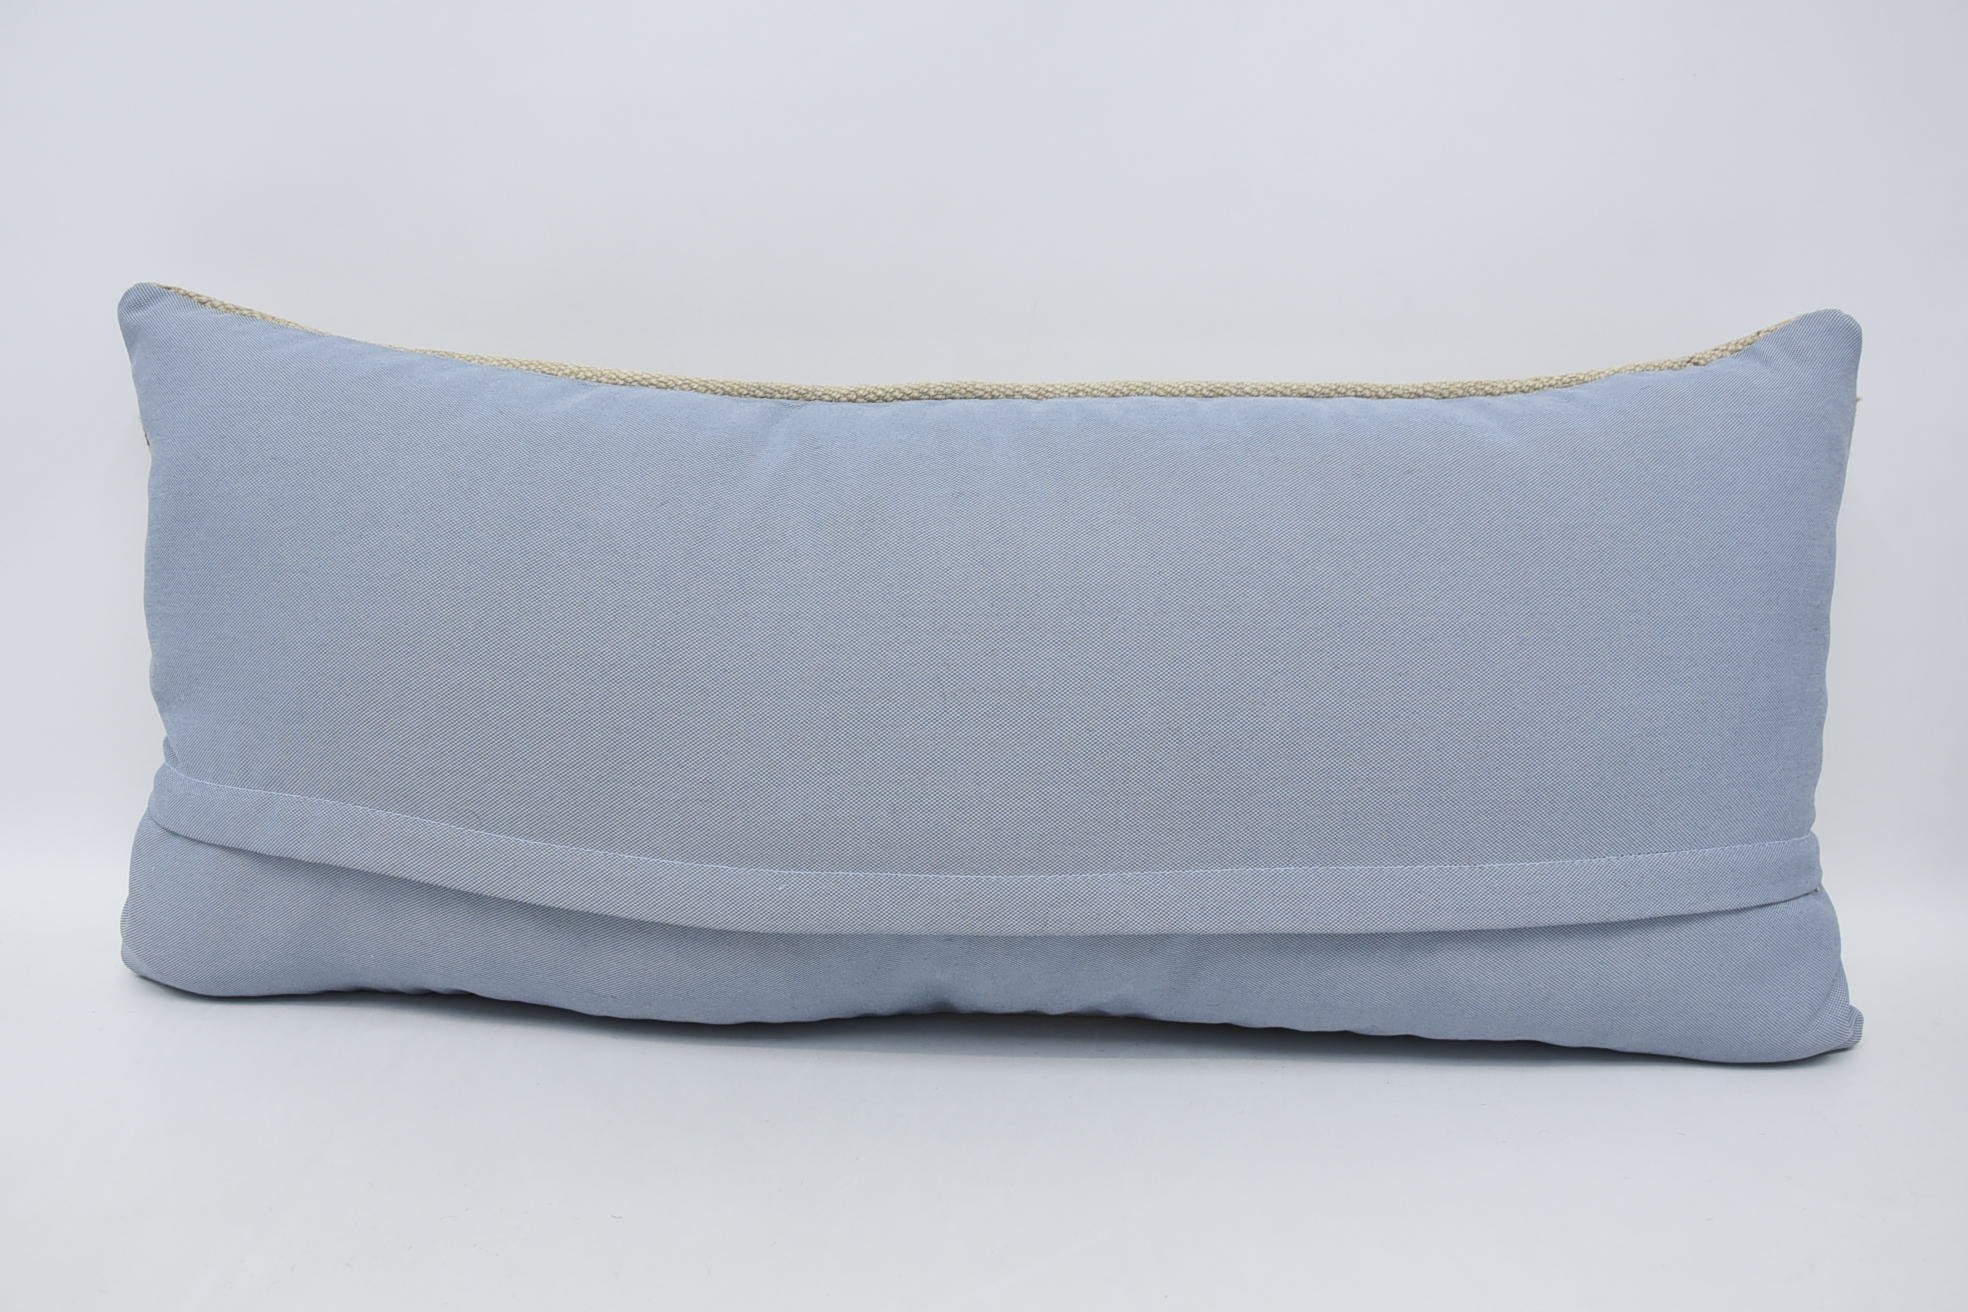 Antique Pillows, Boho Pillow Sham Cover, Throw Kilim Pillow, 16"x36" Beige Pillow Case, Colorful Pillow, Accent Throw Pillow Case